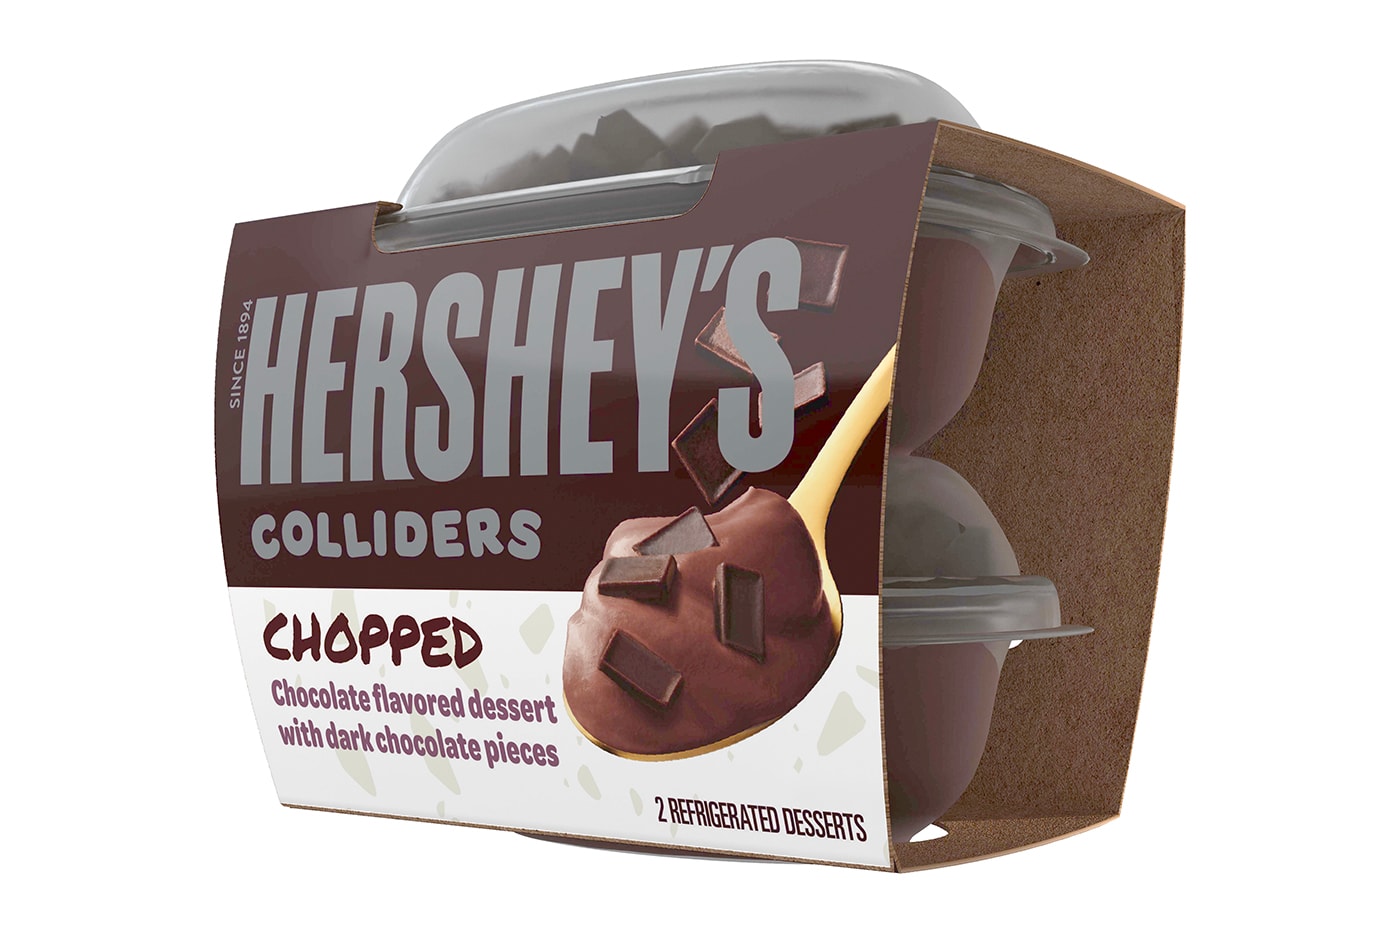 kraft heinz hershey co chocolate desserts colliders dark pieces chopped